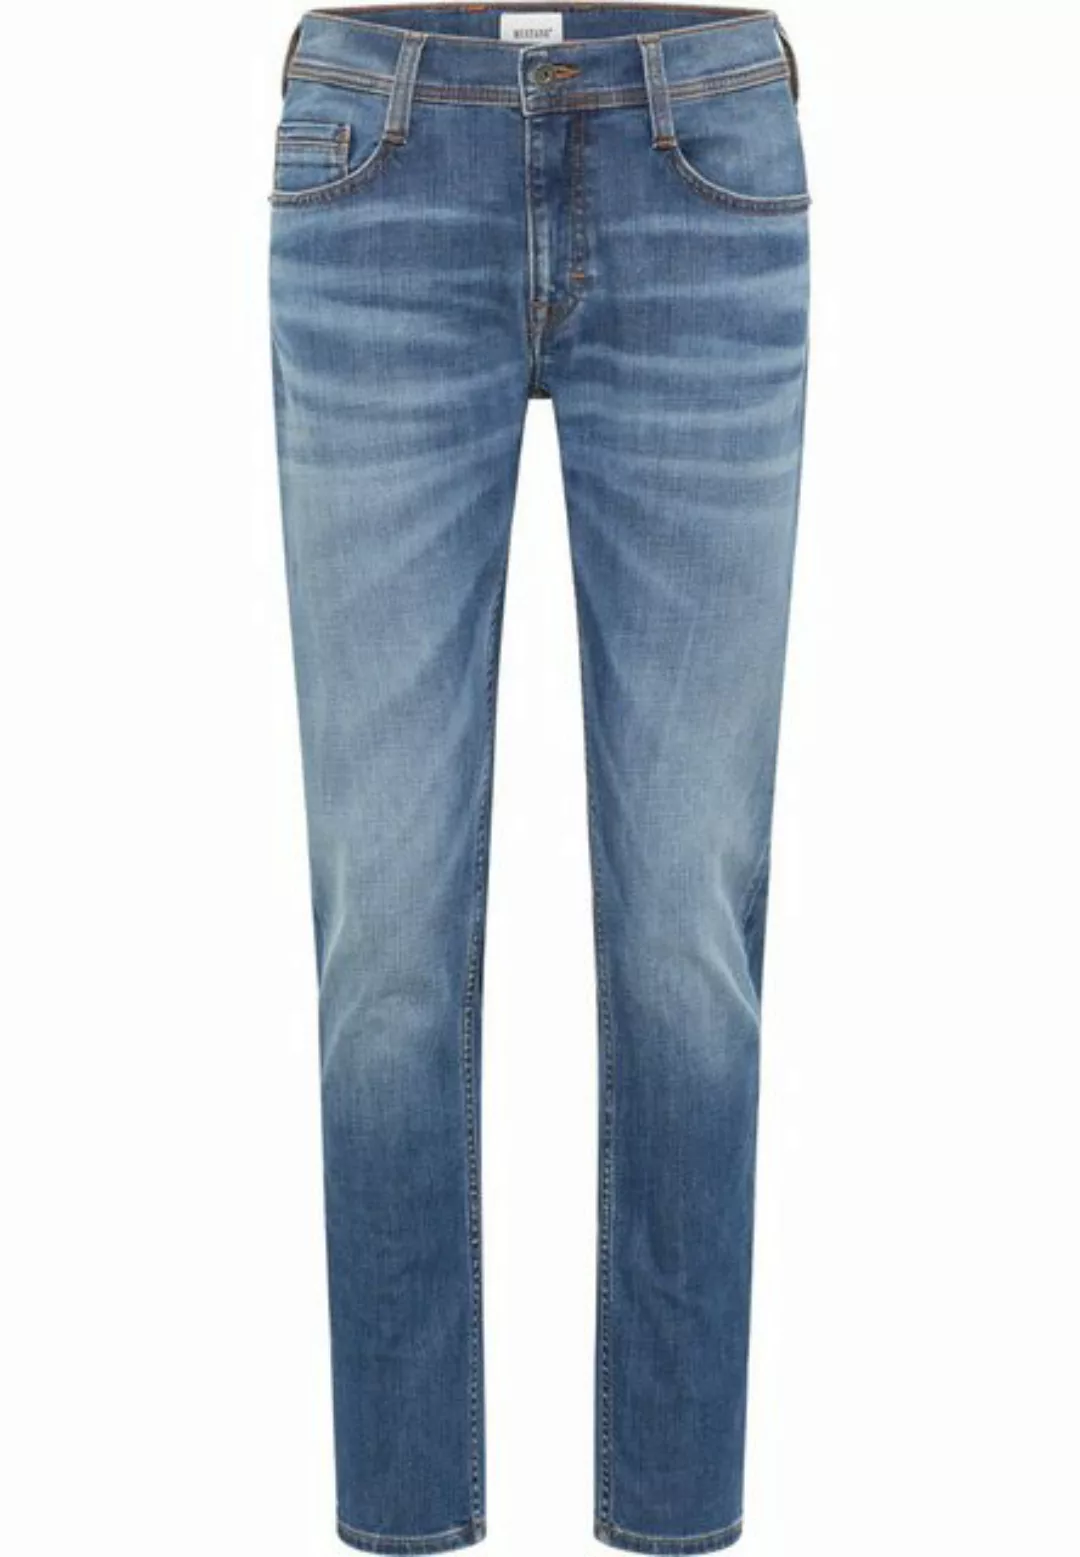 MUSTANG Jeans Oregon Tapered 3116-5111/593 günstig online kaufen